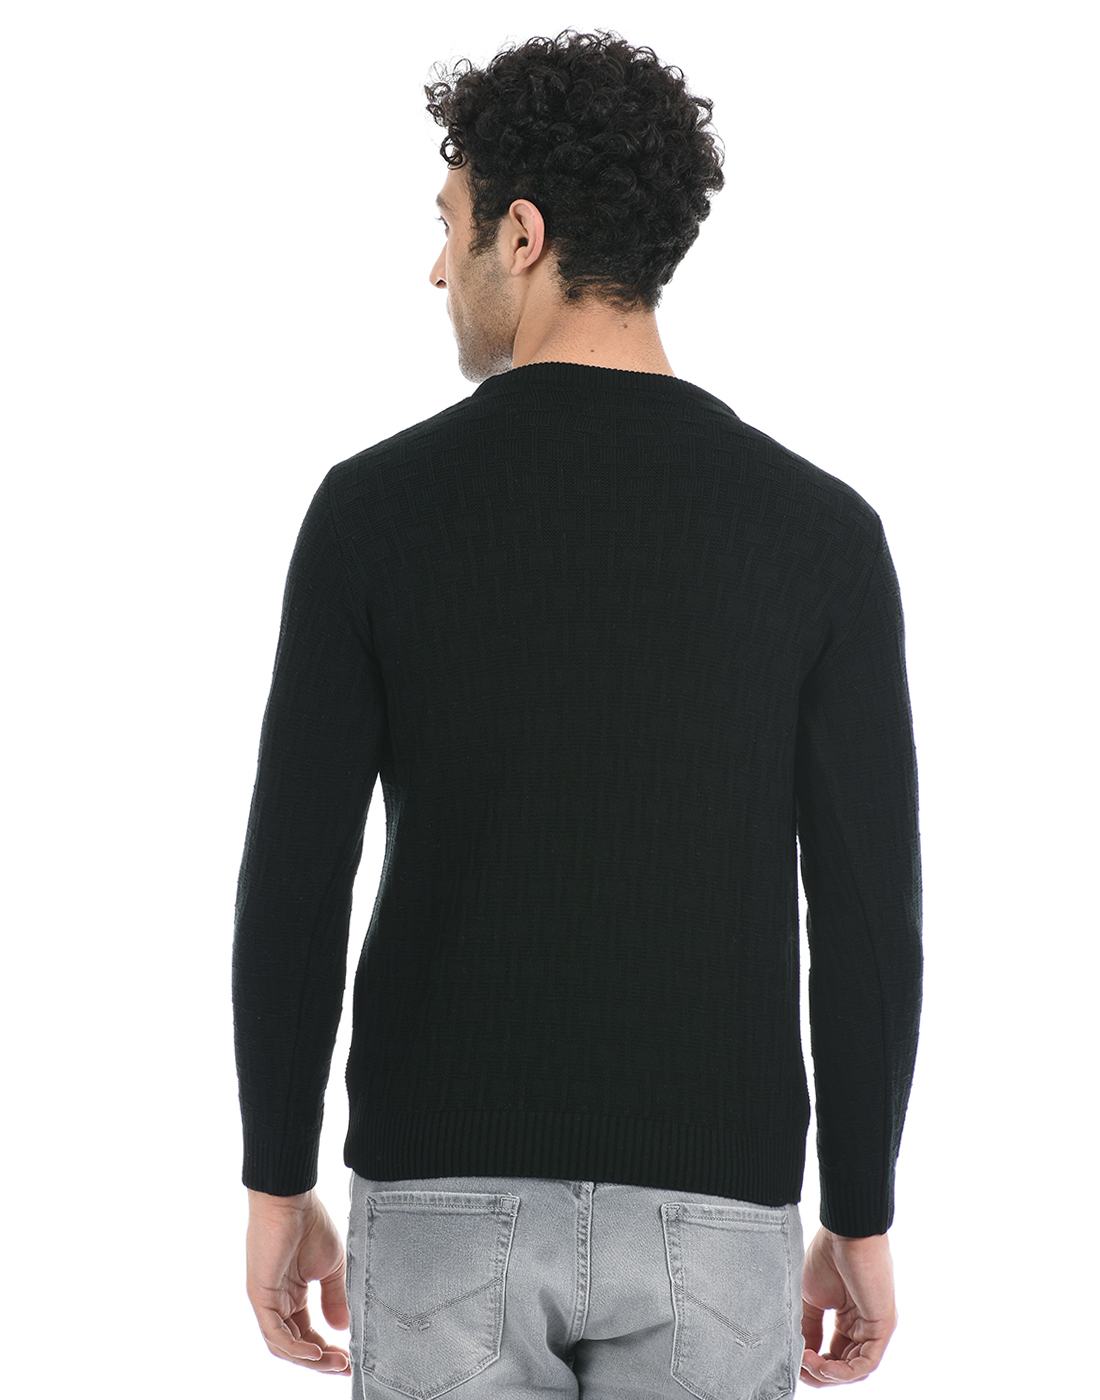 Cloak & Decker by Monte Carlo Men Self Design Black Sweater